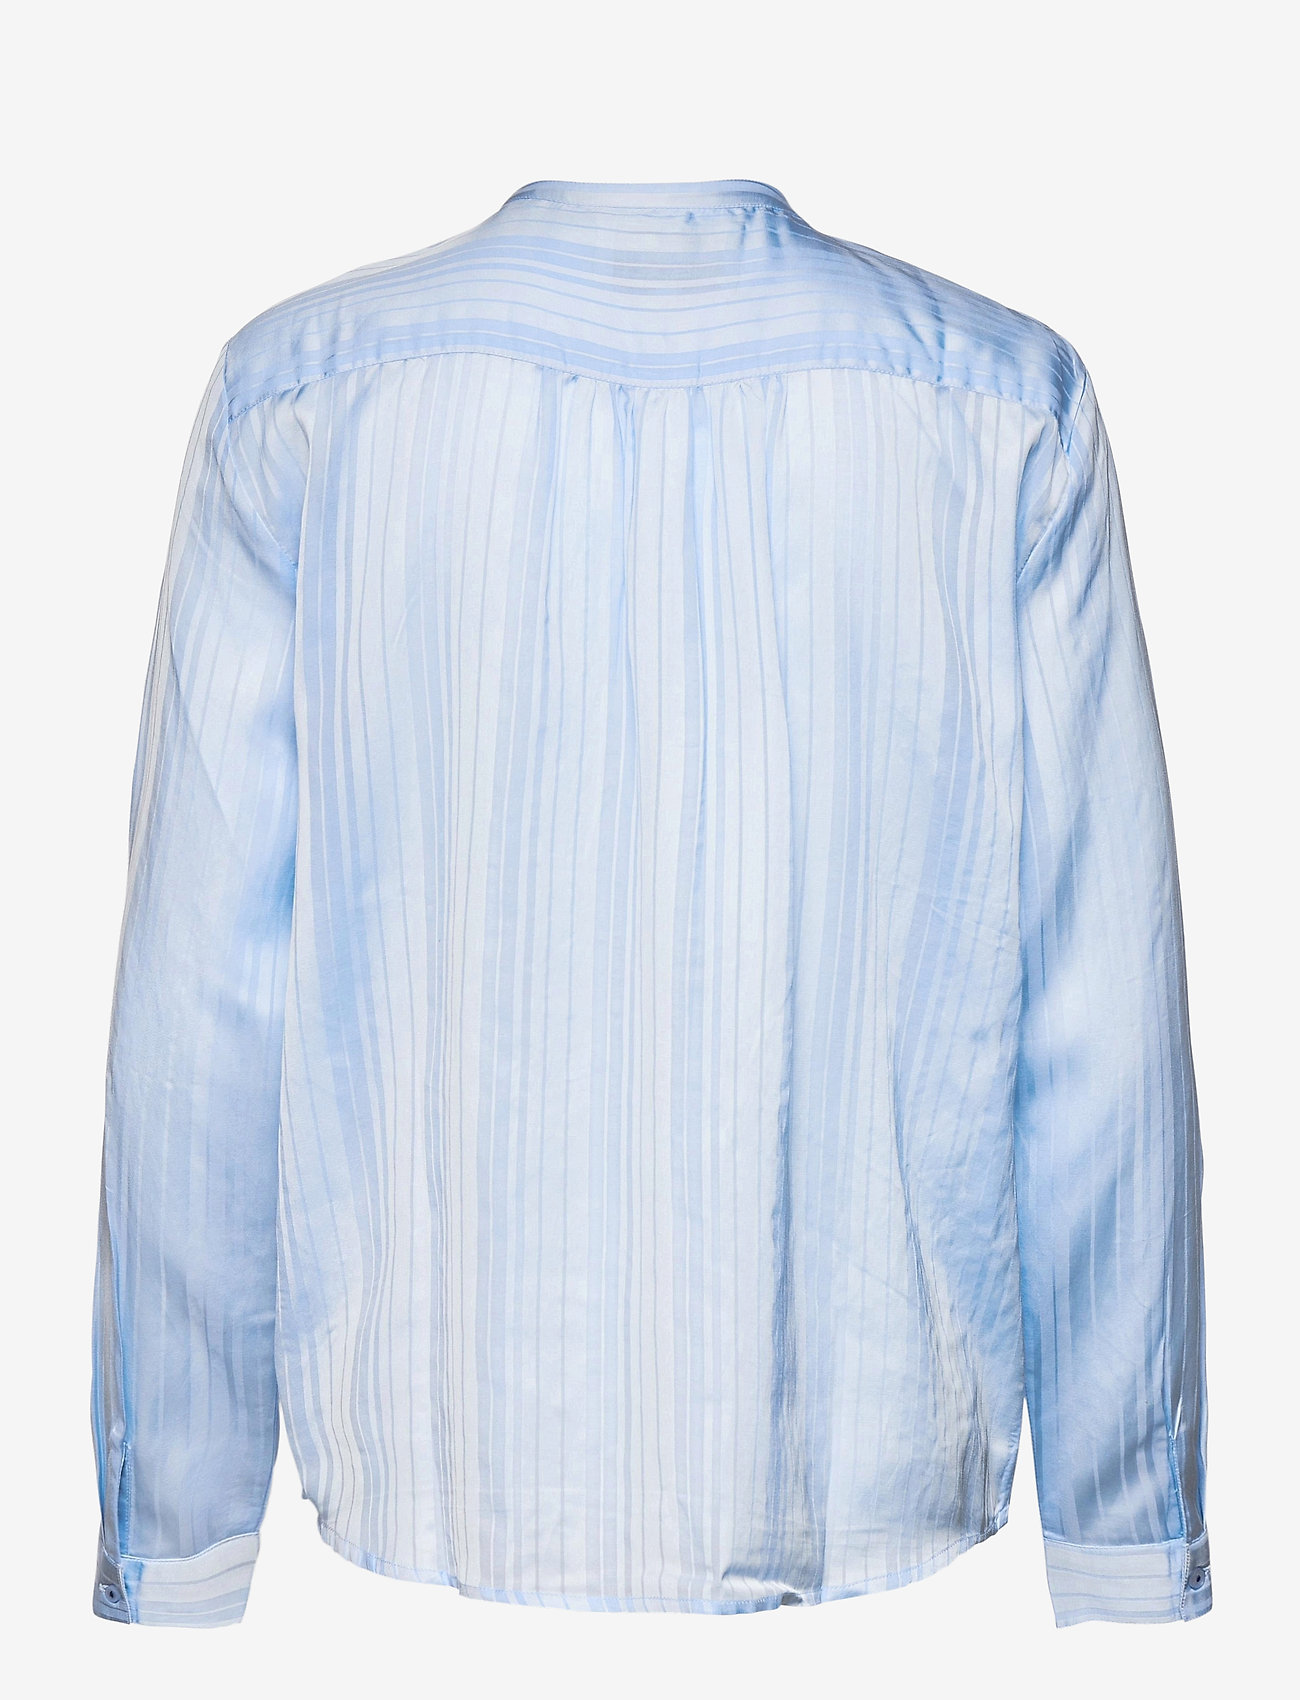 Lollys Laundry - Lux Shirt - långärmade blusar - light blue - 1